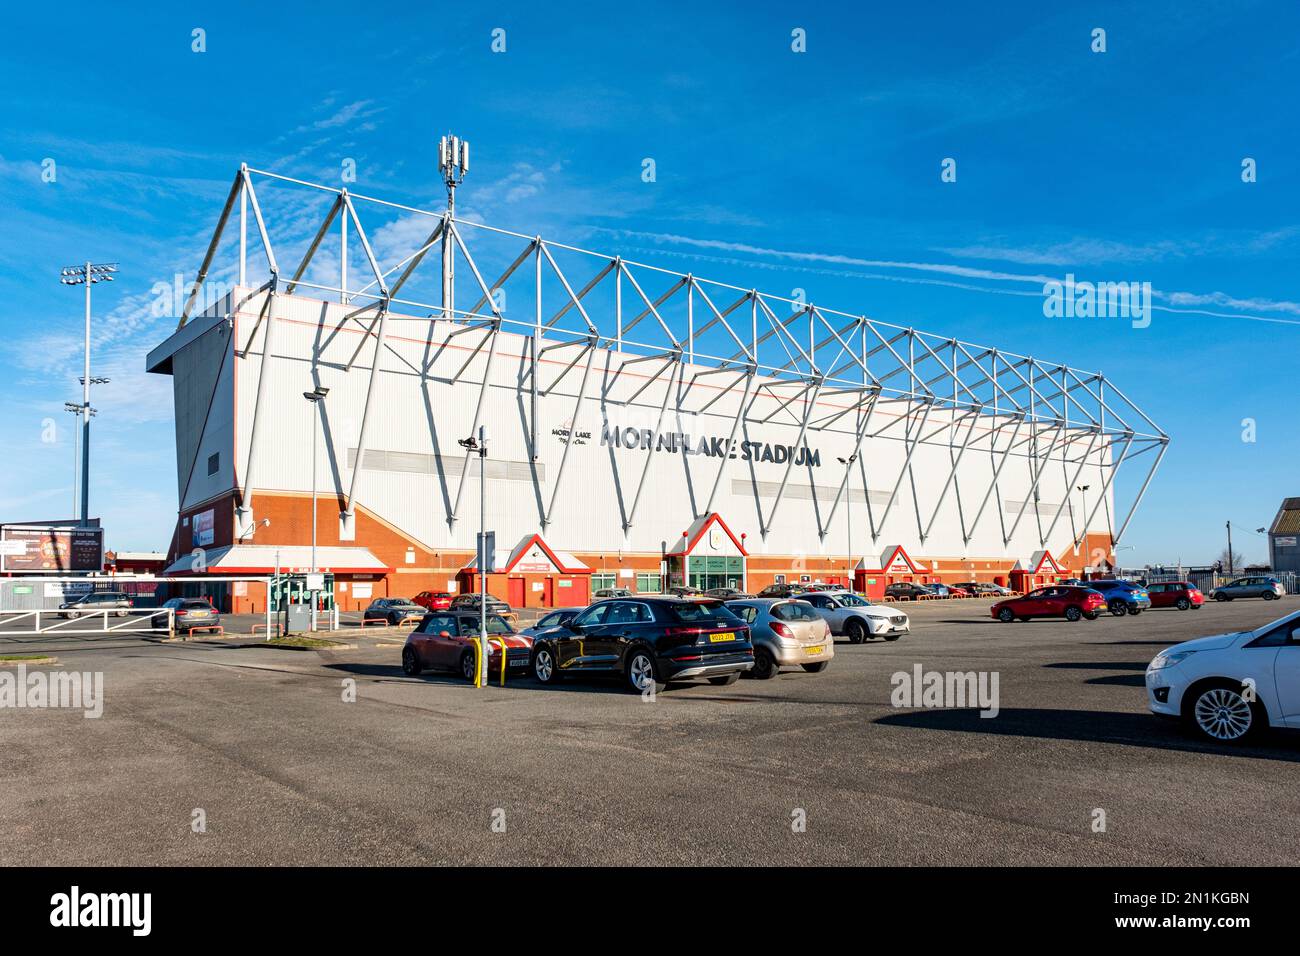 Mornflake Stadium, stade du club de football Crewe Alaxandra, Crewe Cheshire, Royaume-Uni Banque D'Images